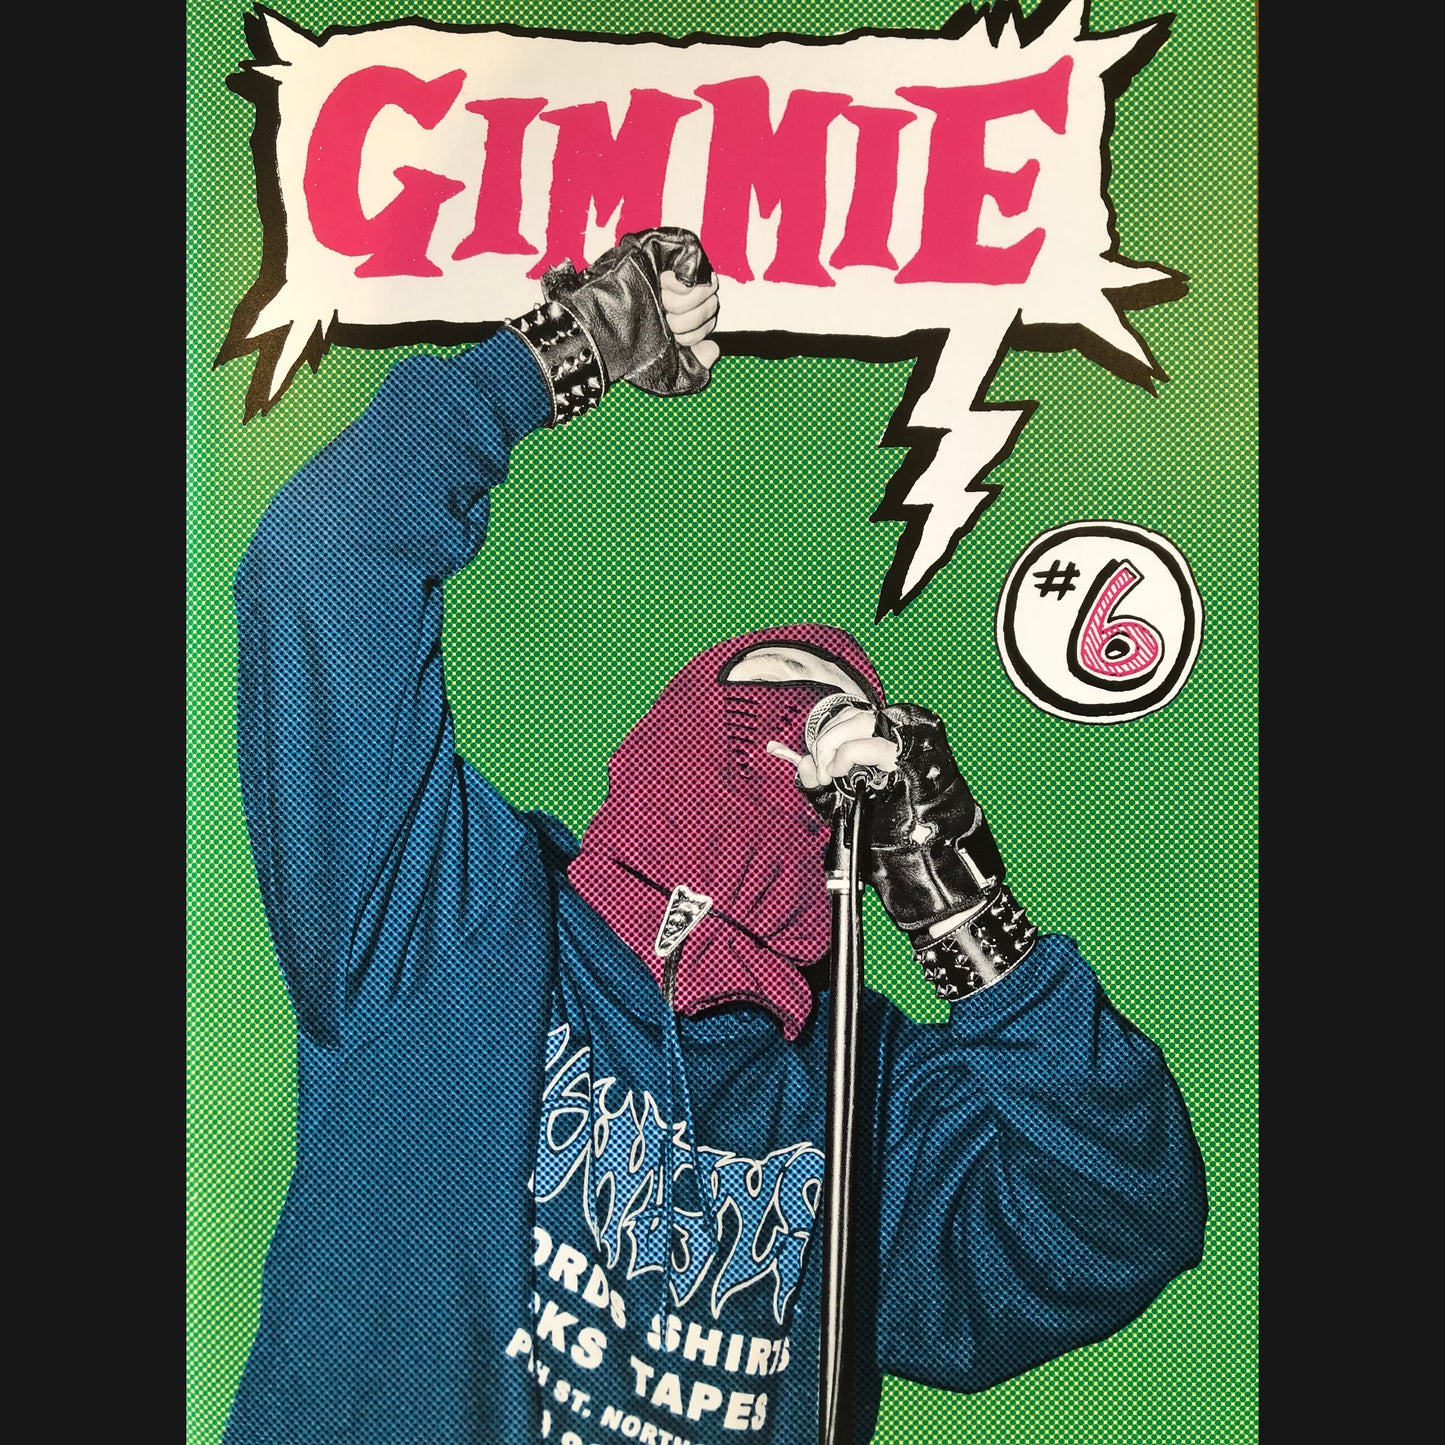 GIMMIE ZINE - "NO. 6" ZINE